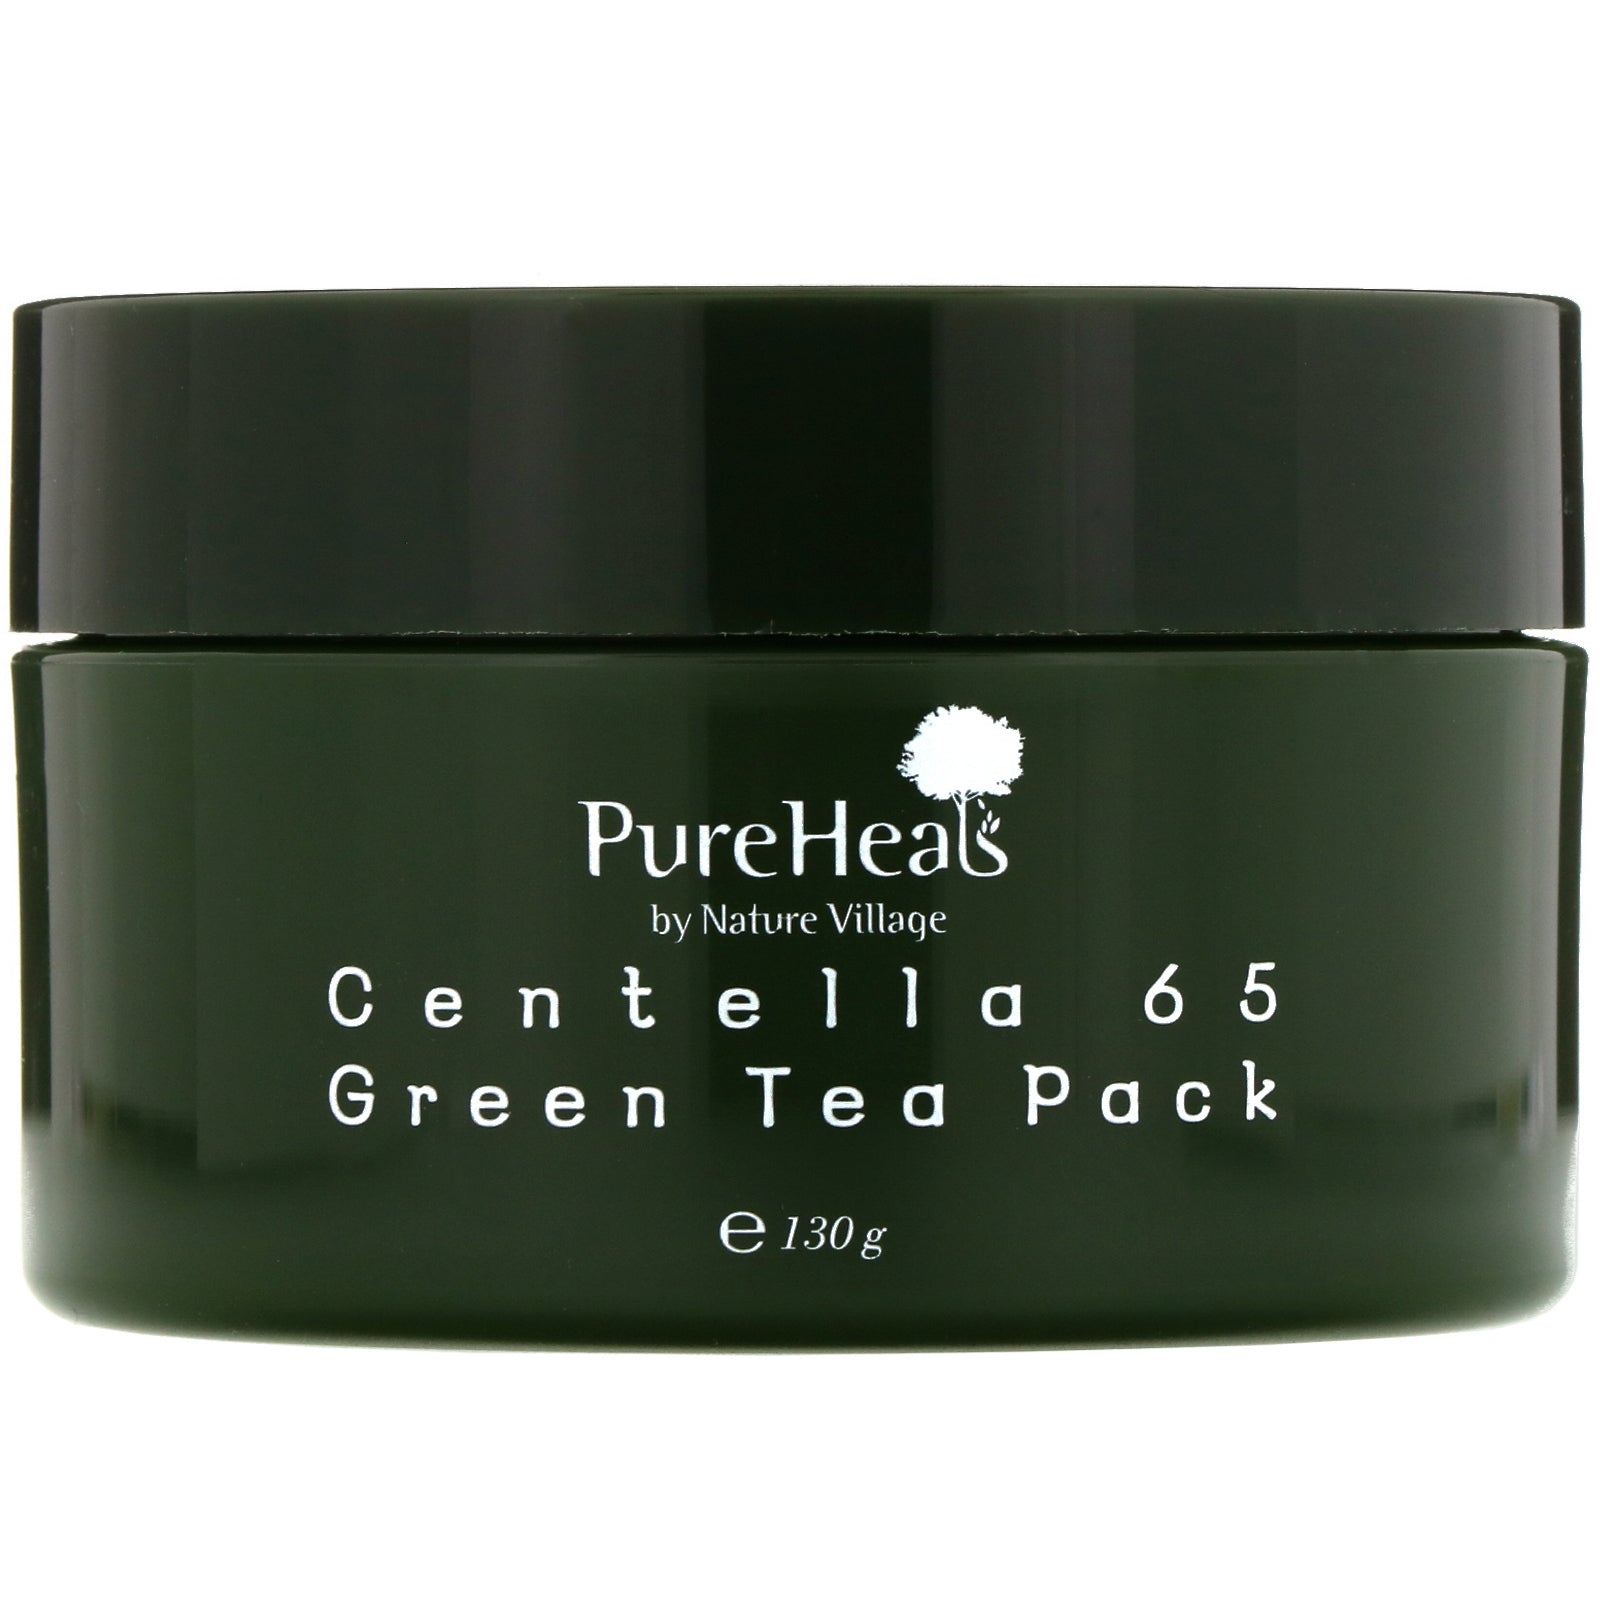 PureHeals, Centella 65 Green Tea Pack, 4.59 oz (130 g)